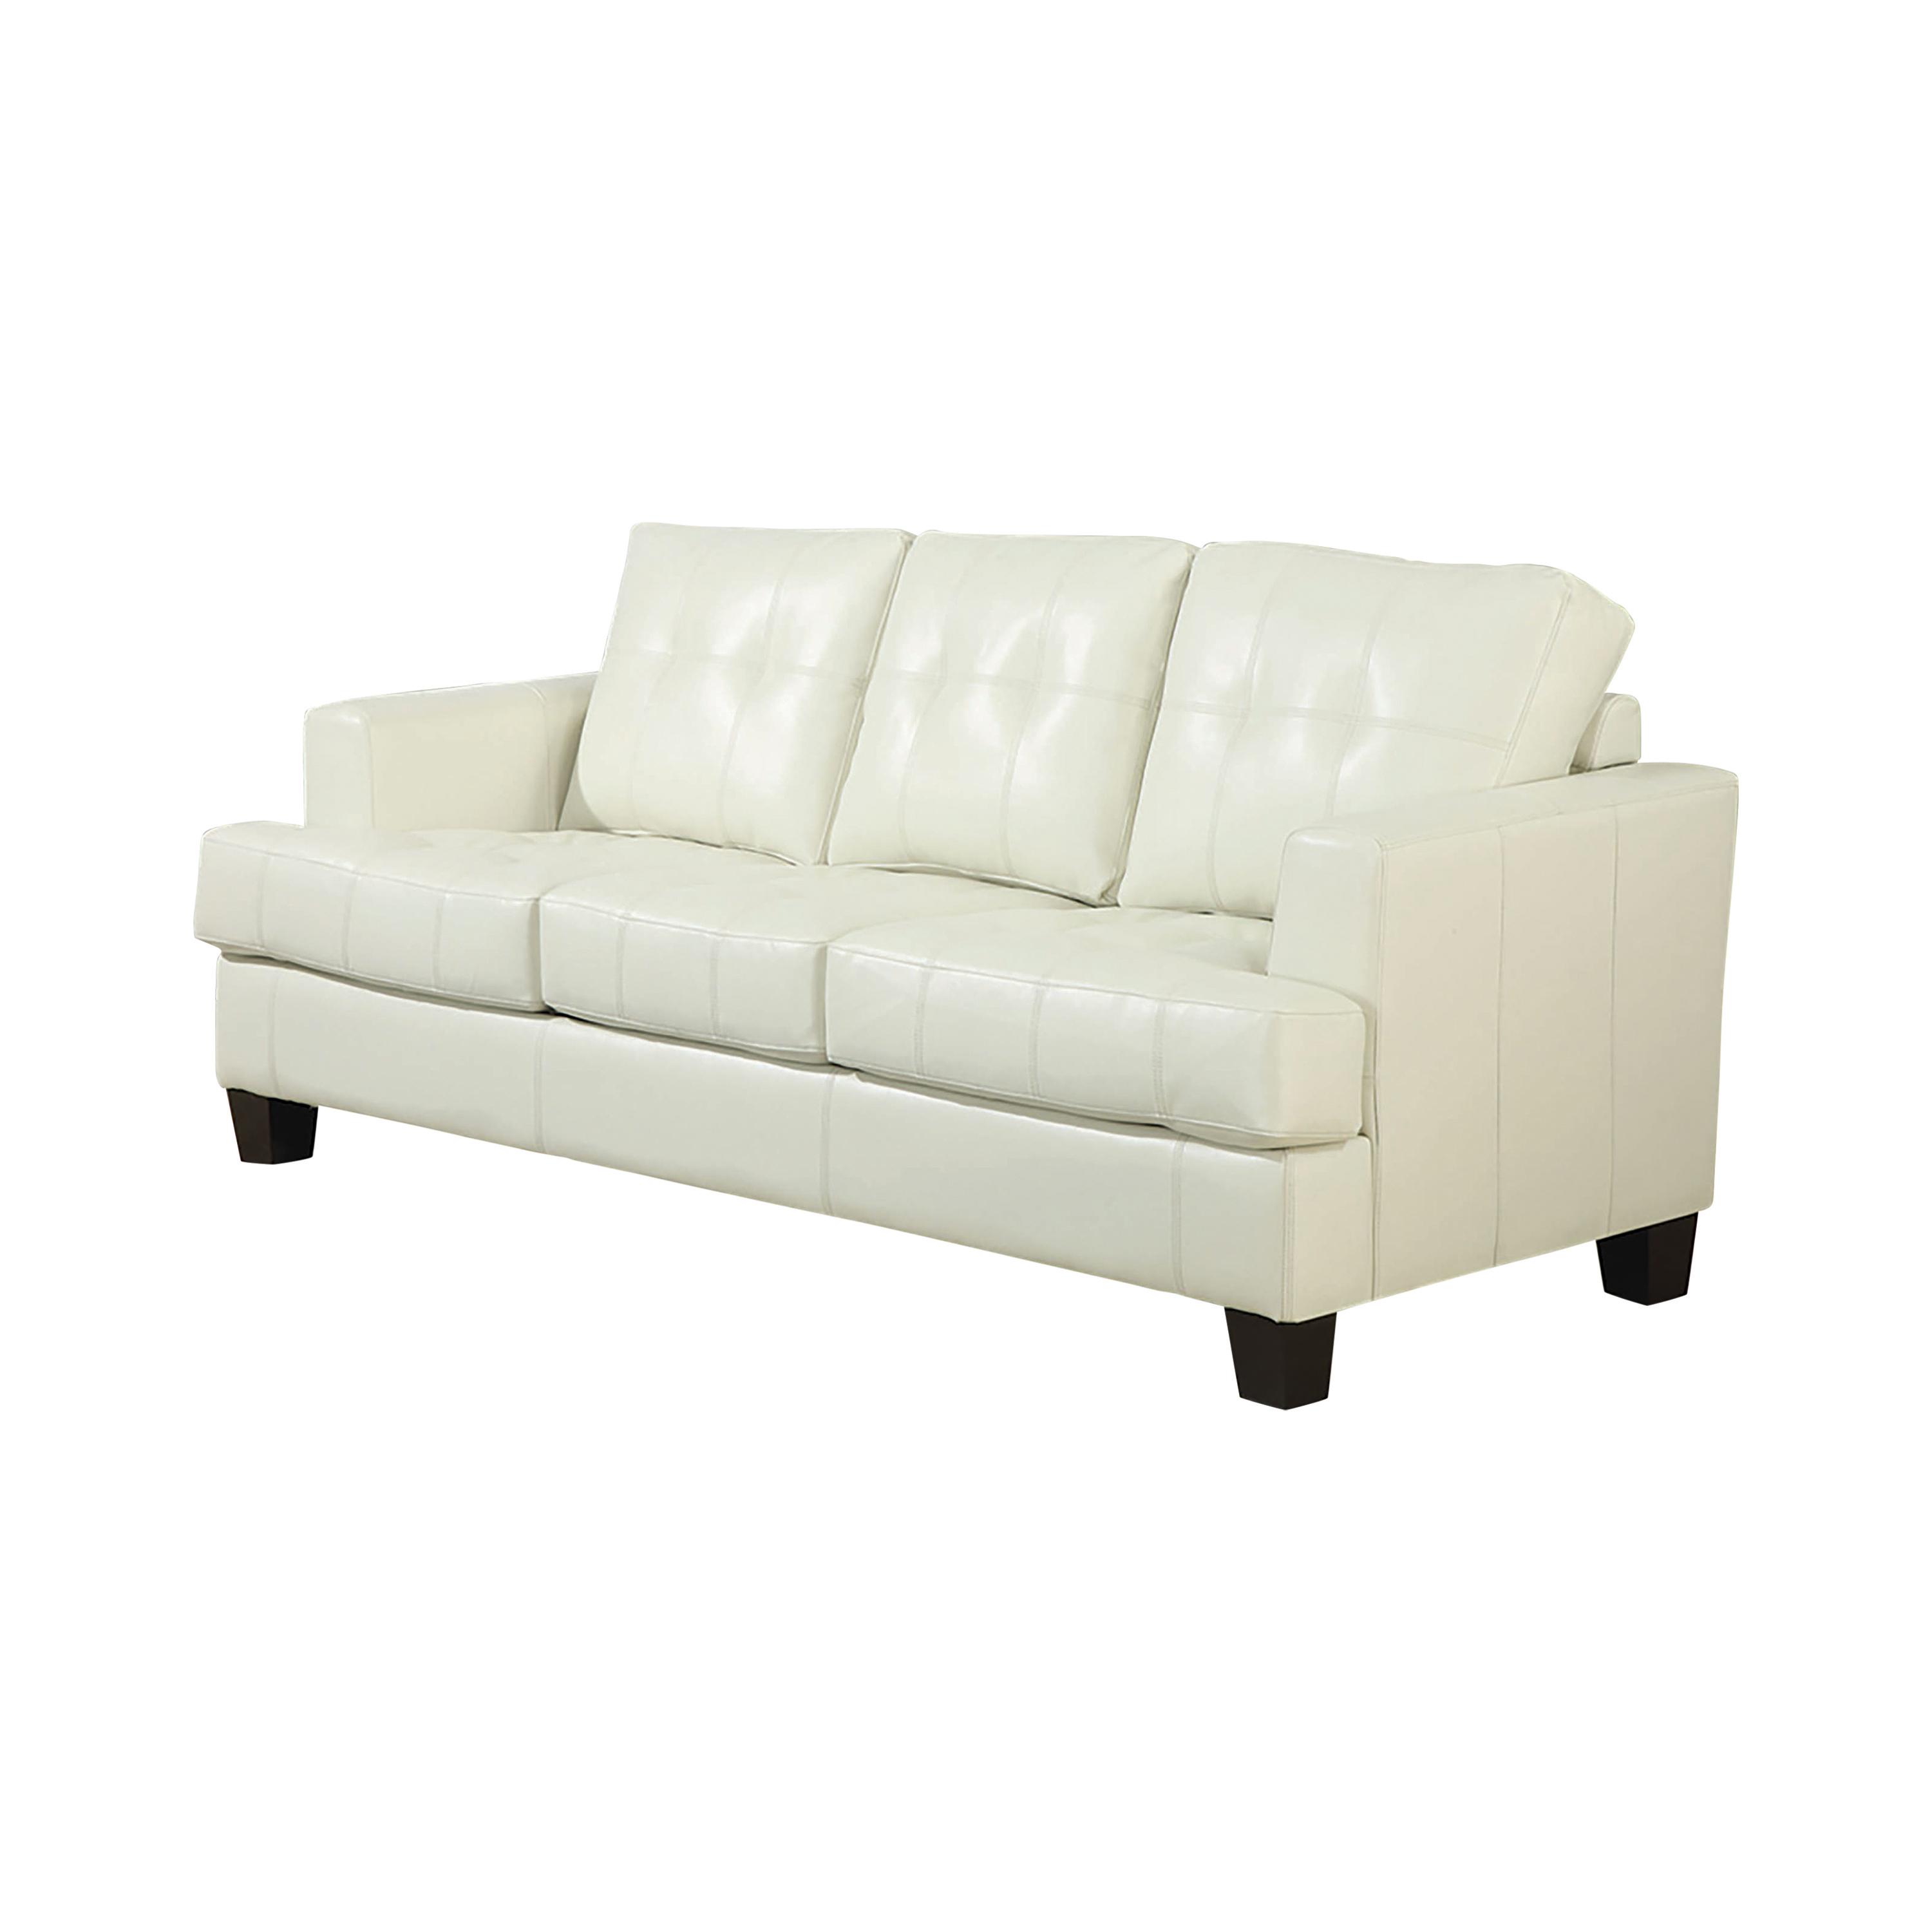 Transitional Sleeper Sofa 501690 Samuel 501690 in Cream Leatherette